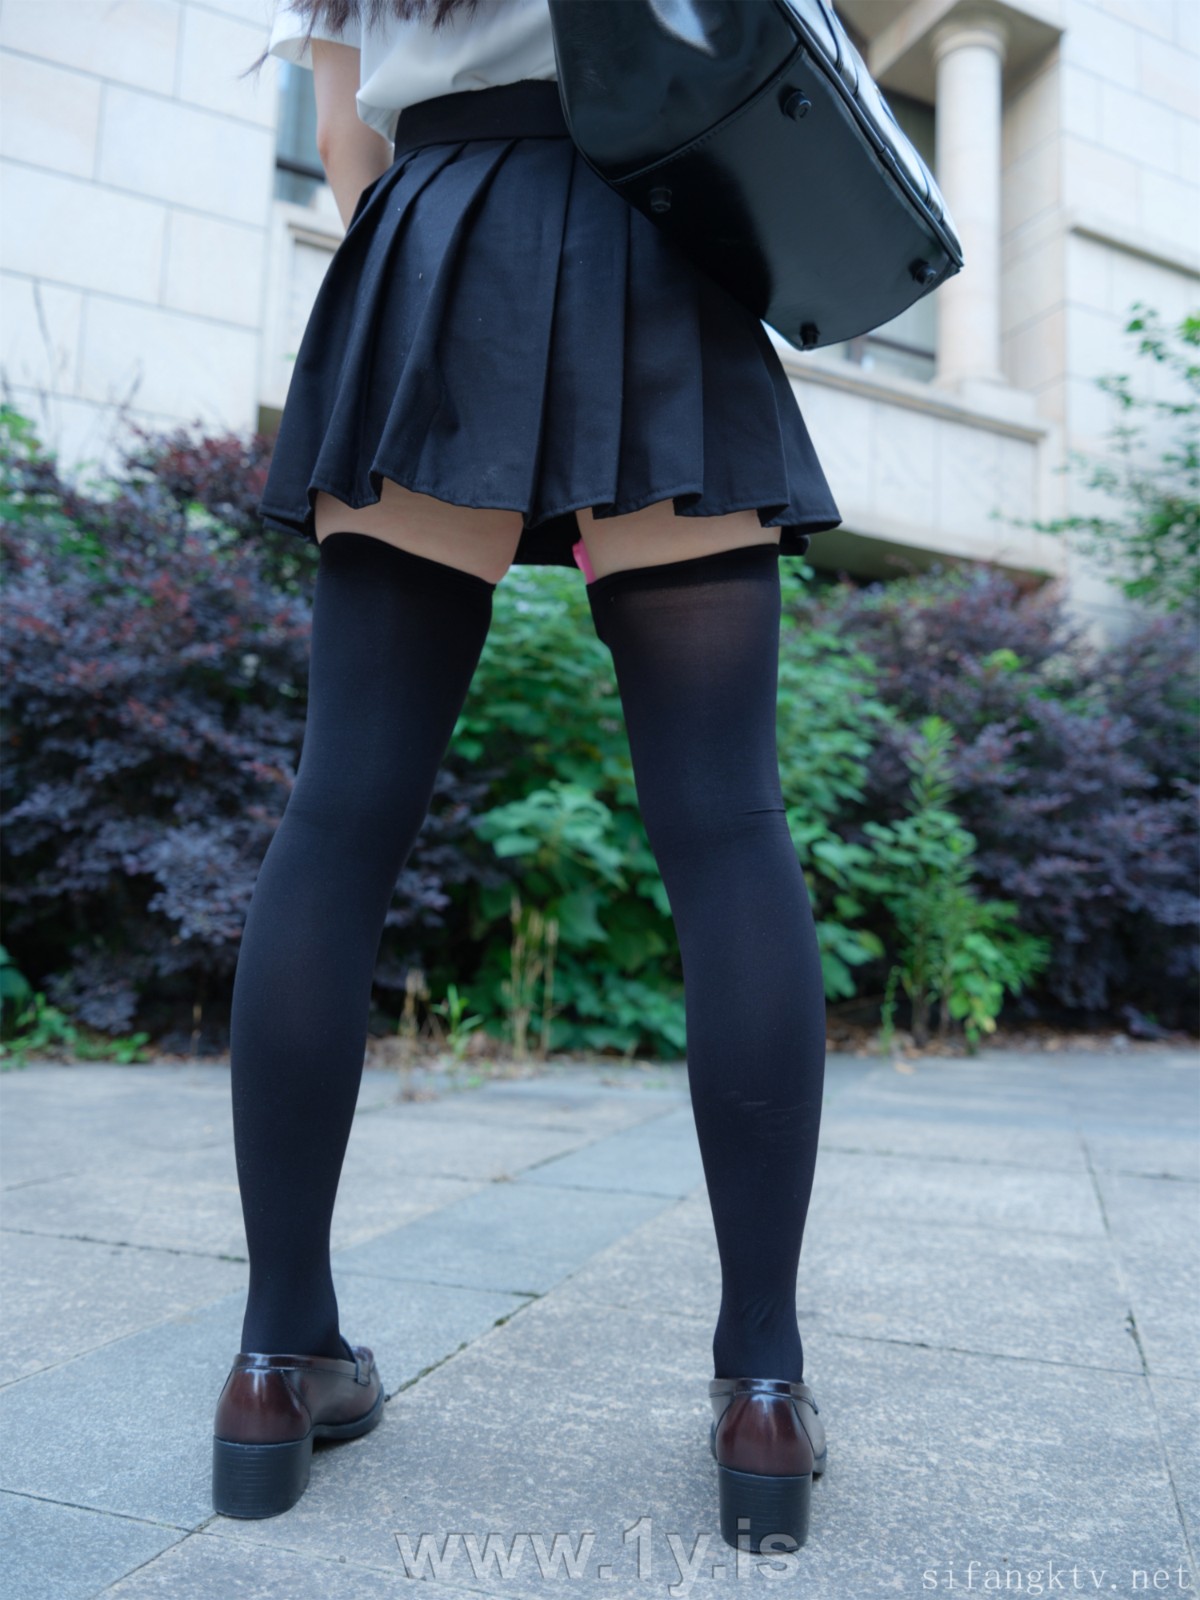 The Tender girl in black stockings Outdoor Exposure-1 (5)